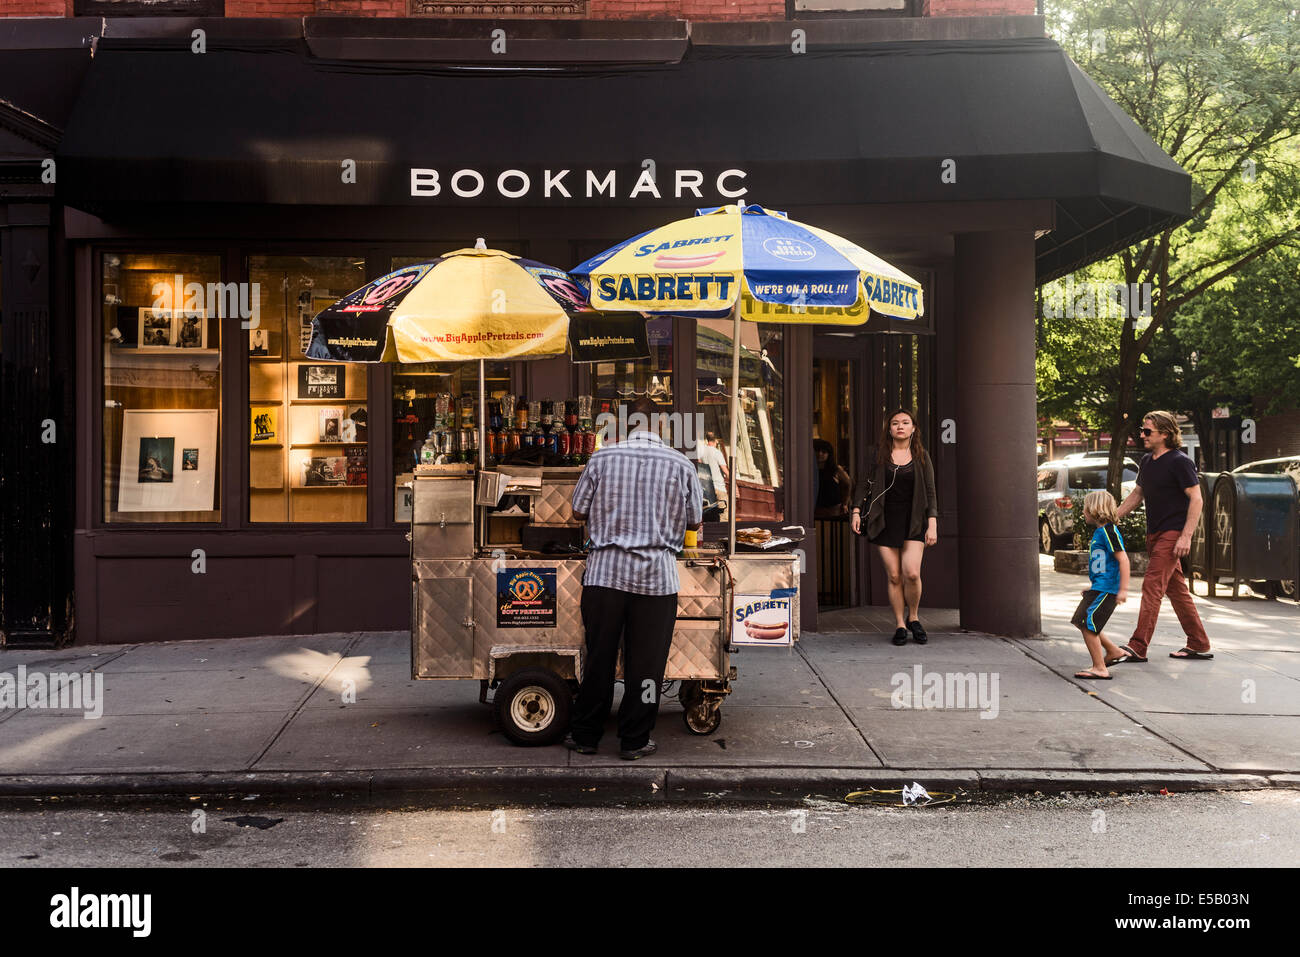 New York, NY - 25 juillet 2014 - Marc Jacobs Bookstore sur Bleecker Street Banque D'Images